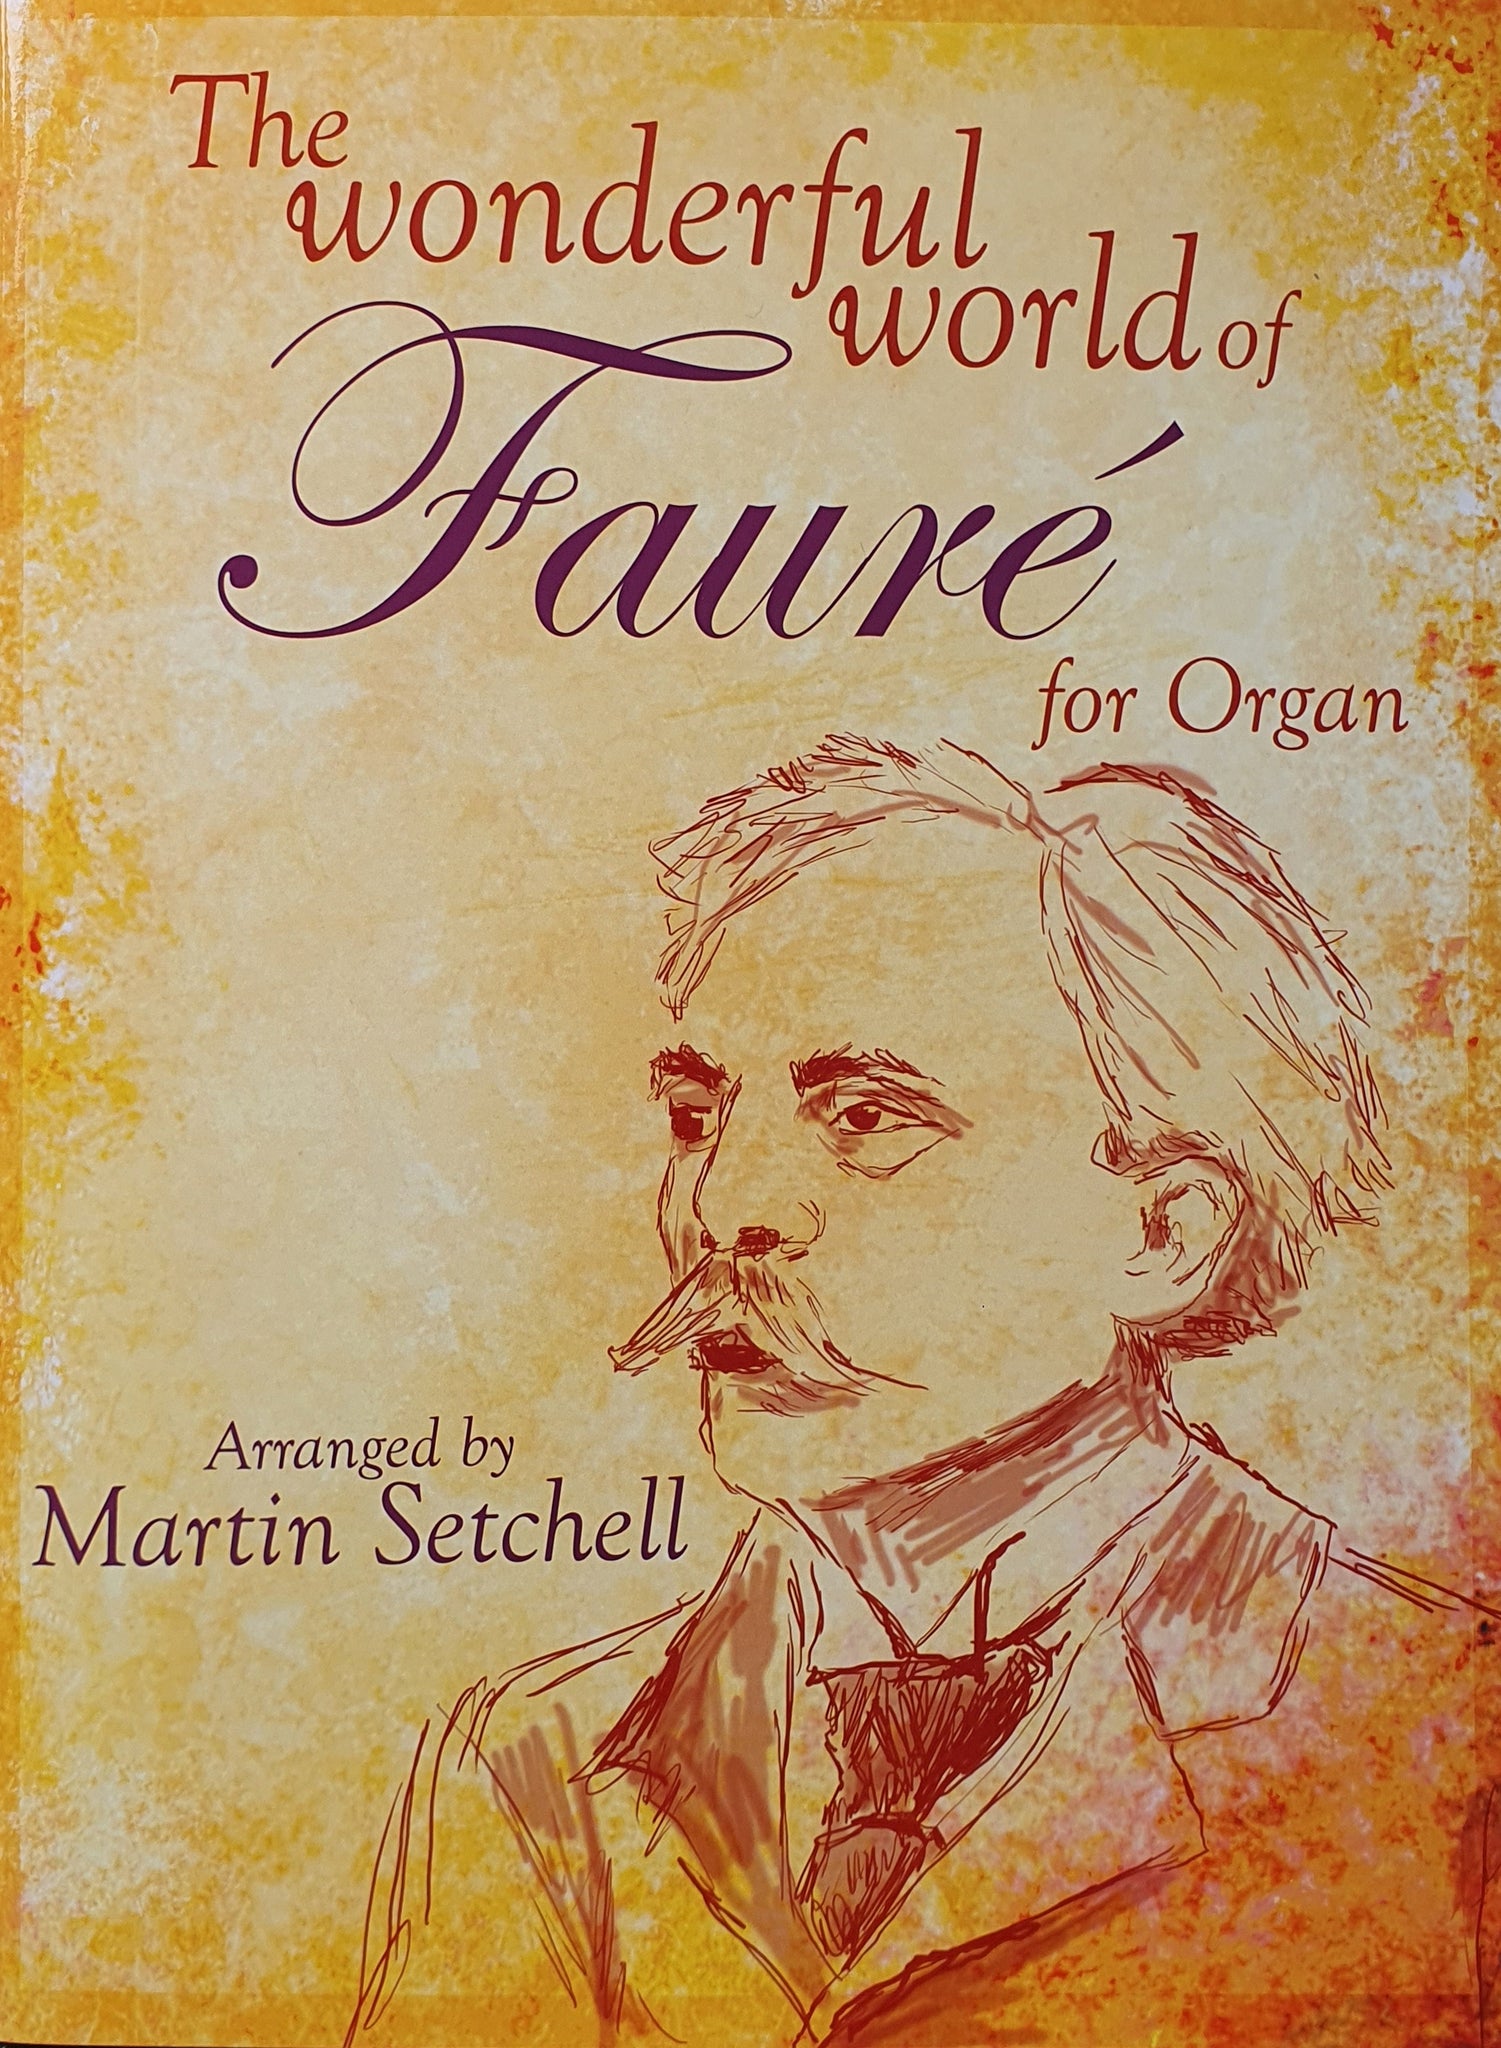 Wonderful World of Faure for Organ